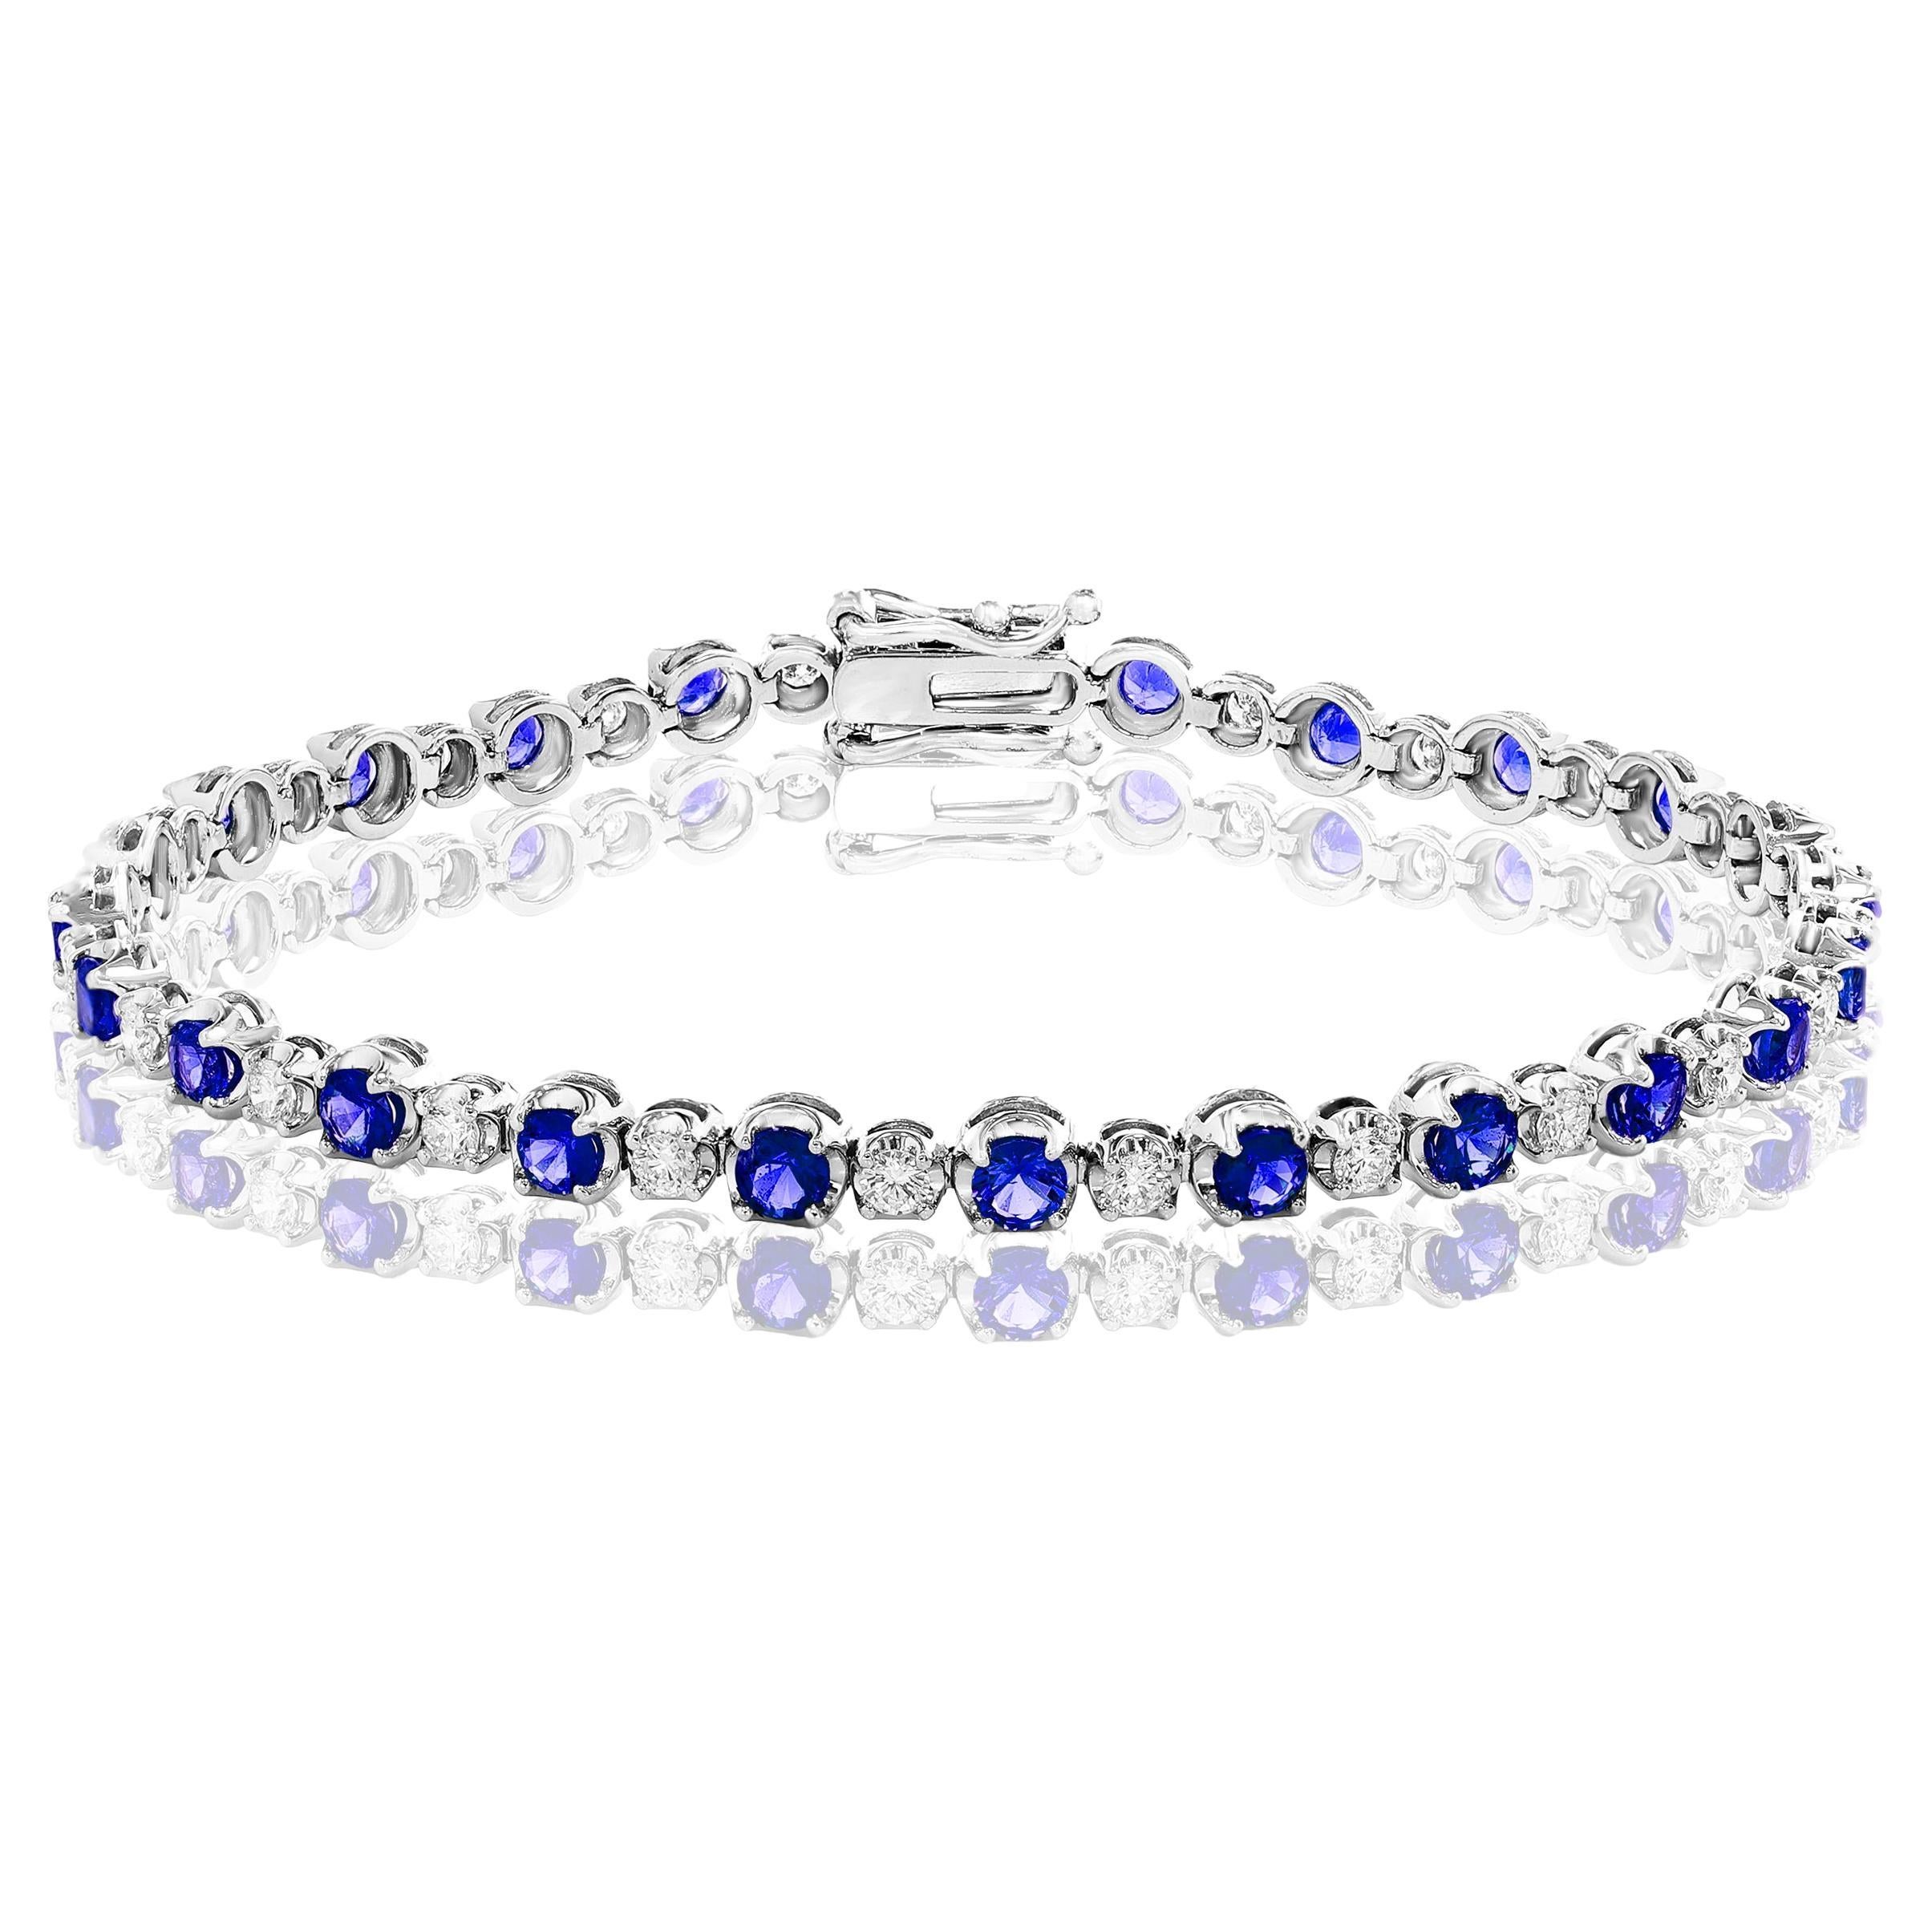 2.96 Carat Round Blue Sapphire and Diamond Bracelet in 14k White Gold